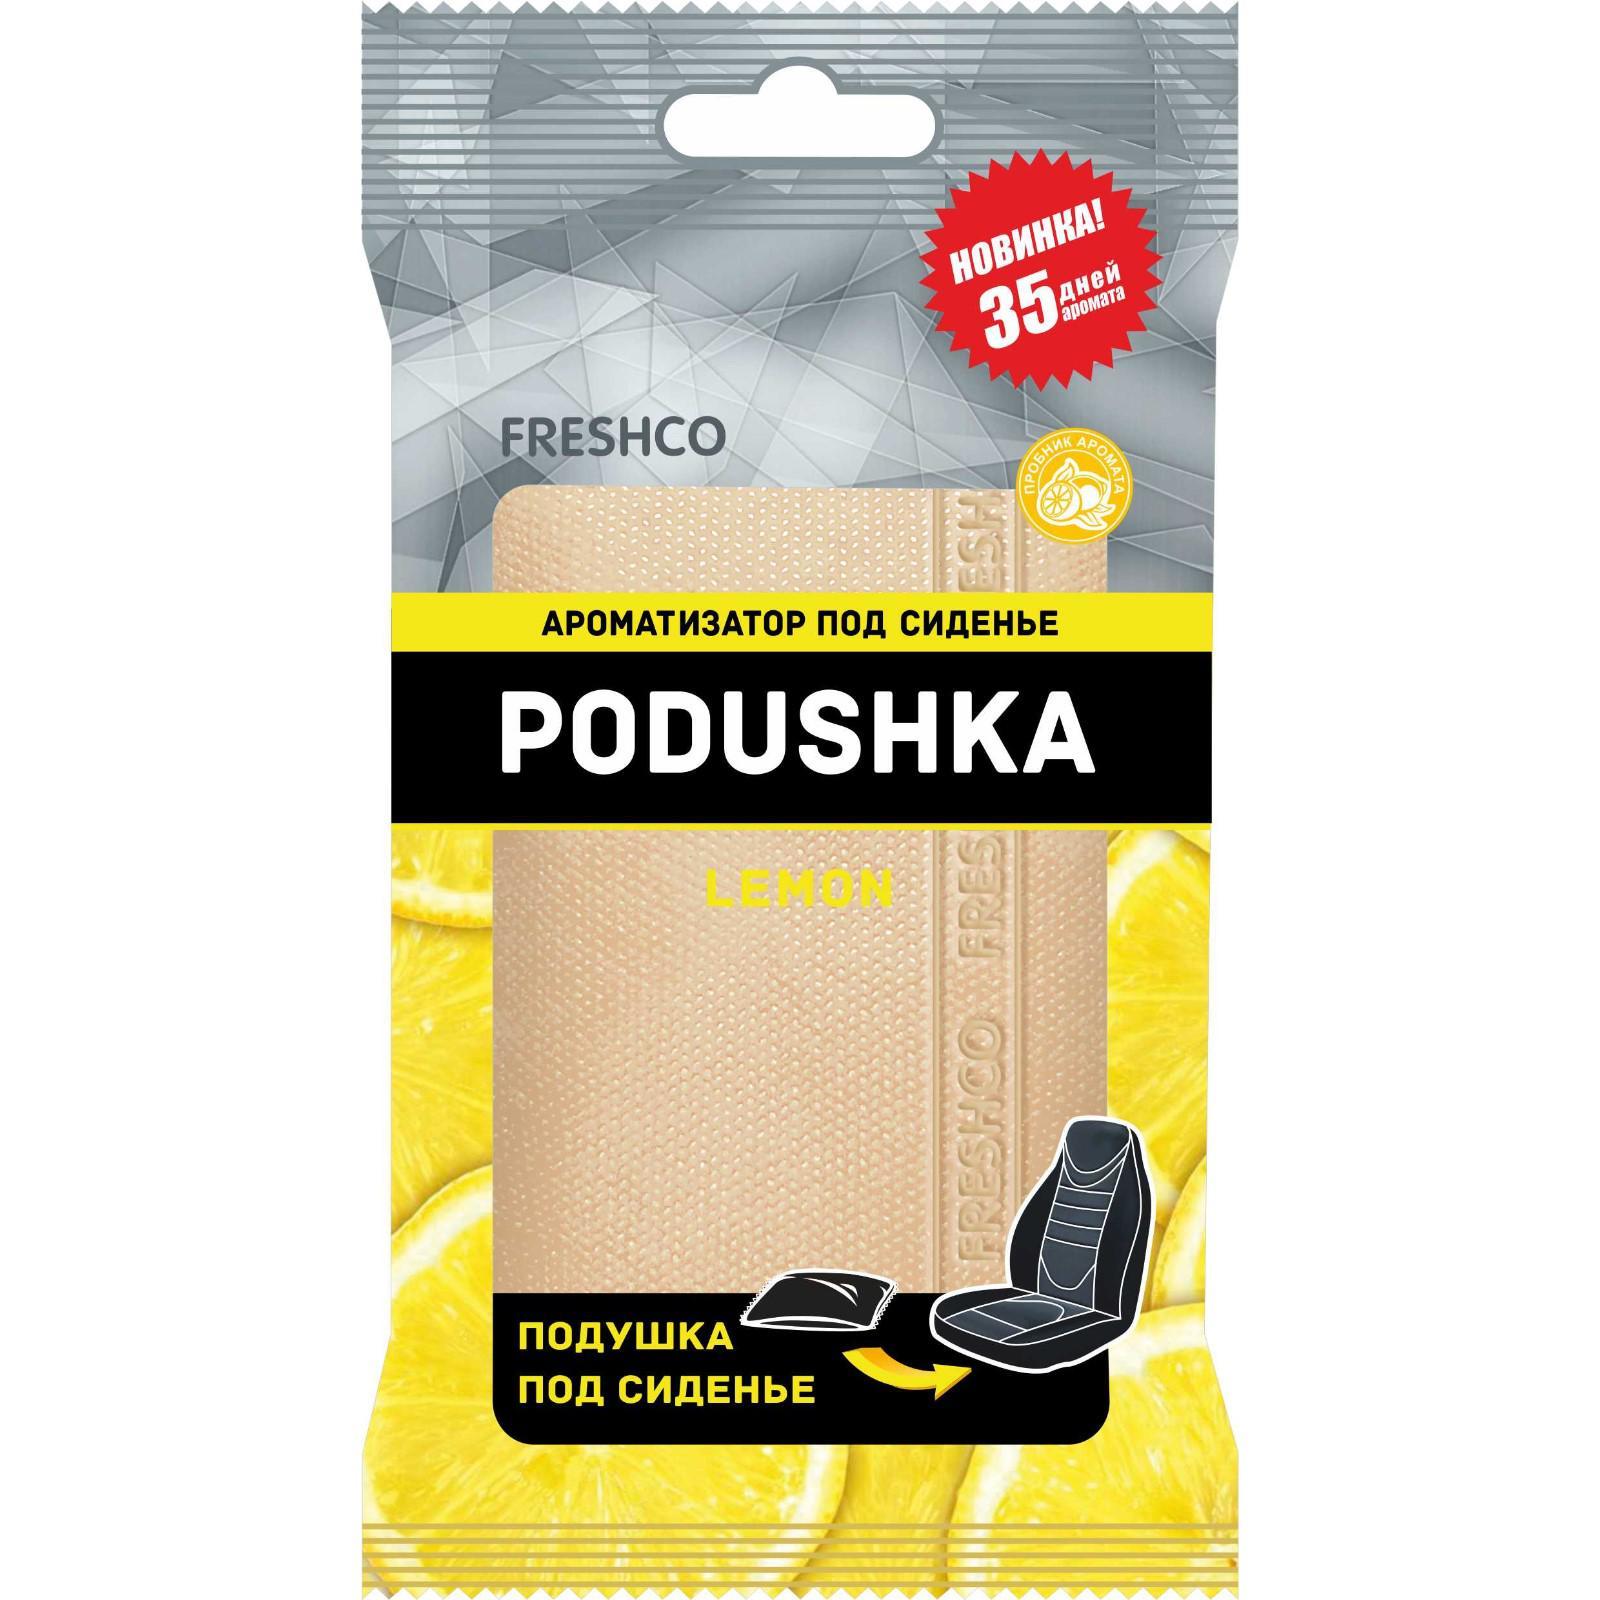 Ароматизатор под сиденье "Vkusno Podushka", лимон-лайм 6978886